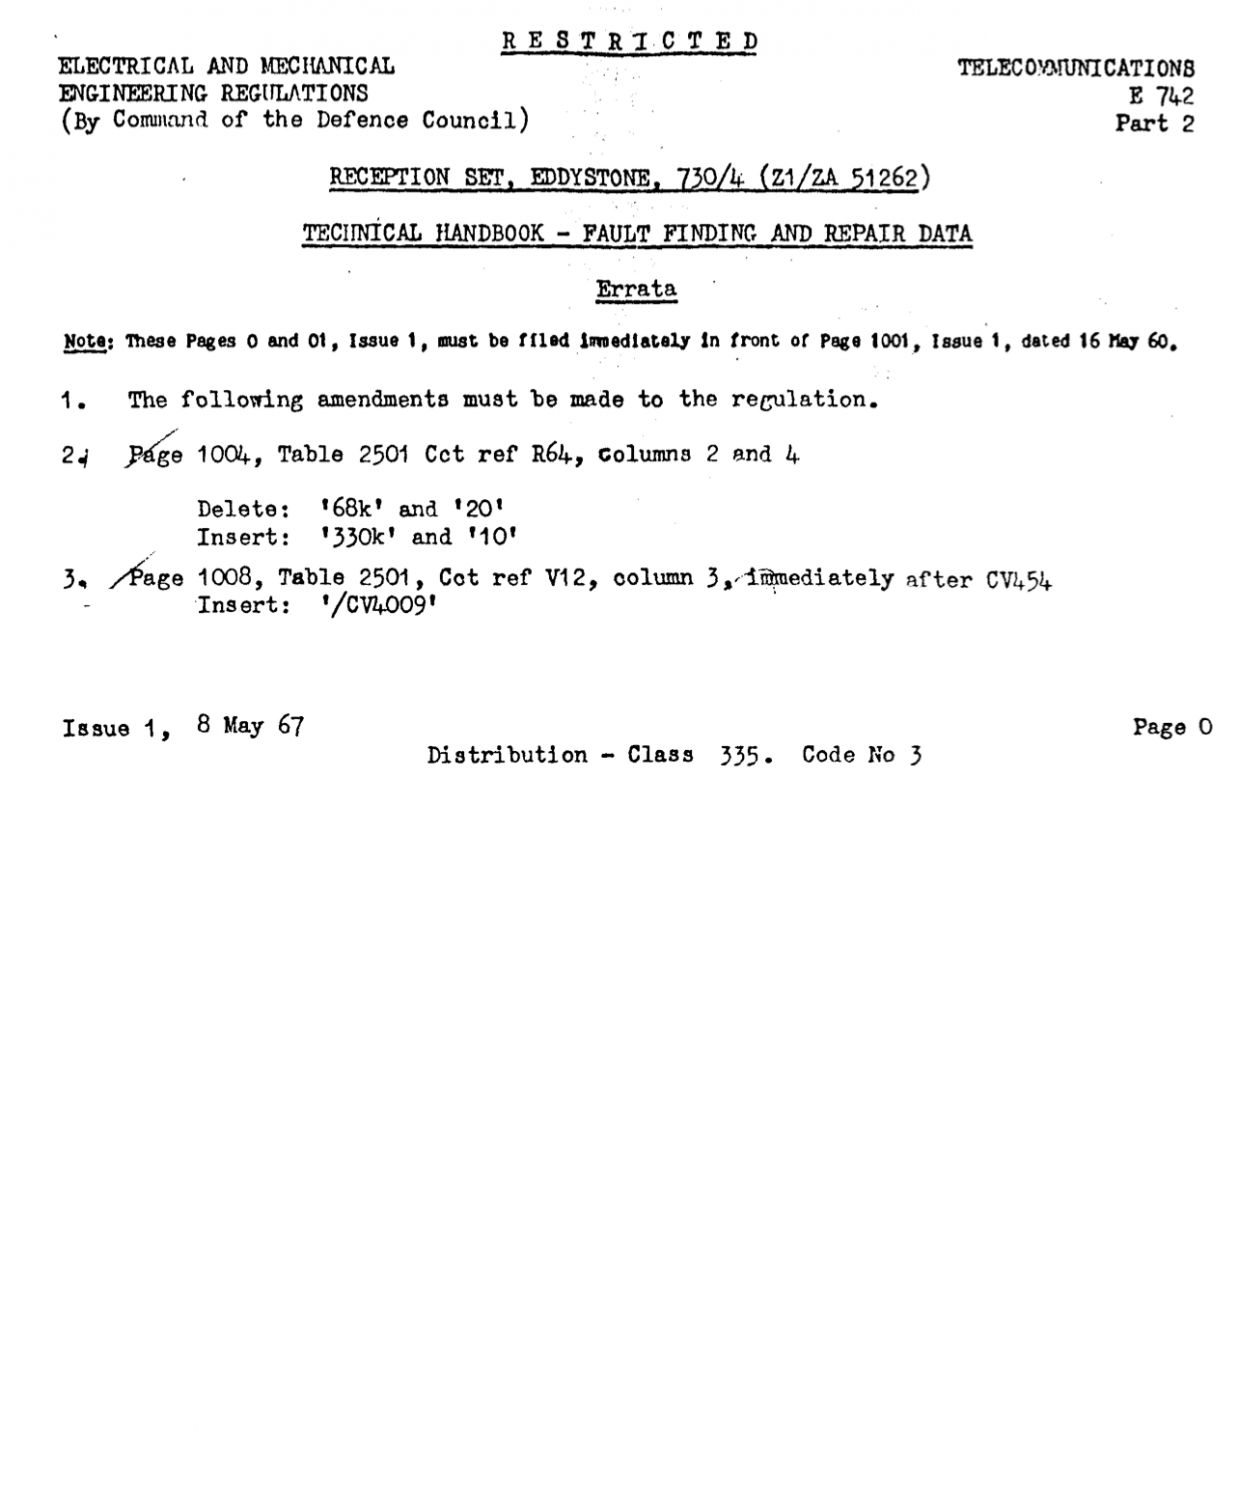 Eddystone Type 730-4 - Military Technical Handbook E-742 Part 2